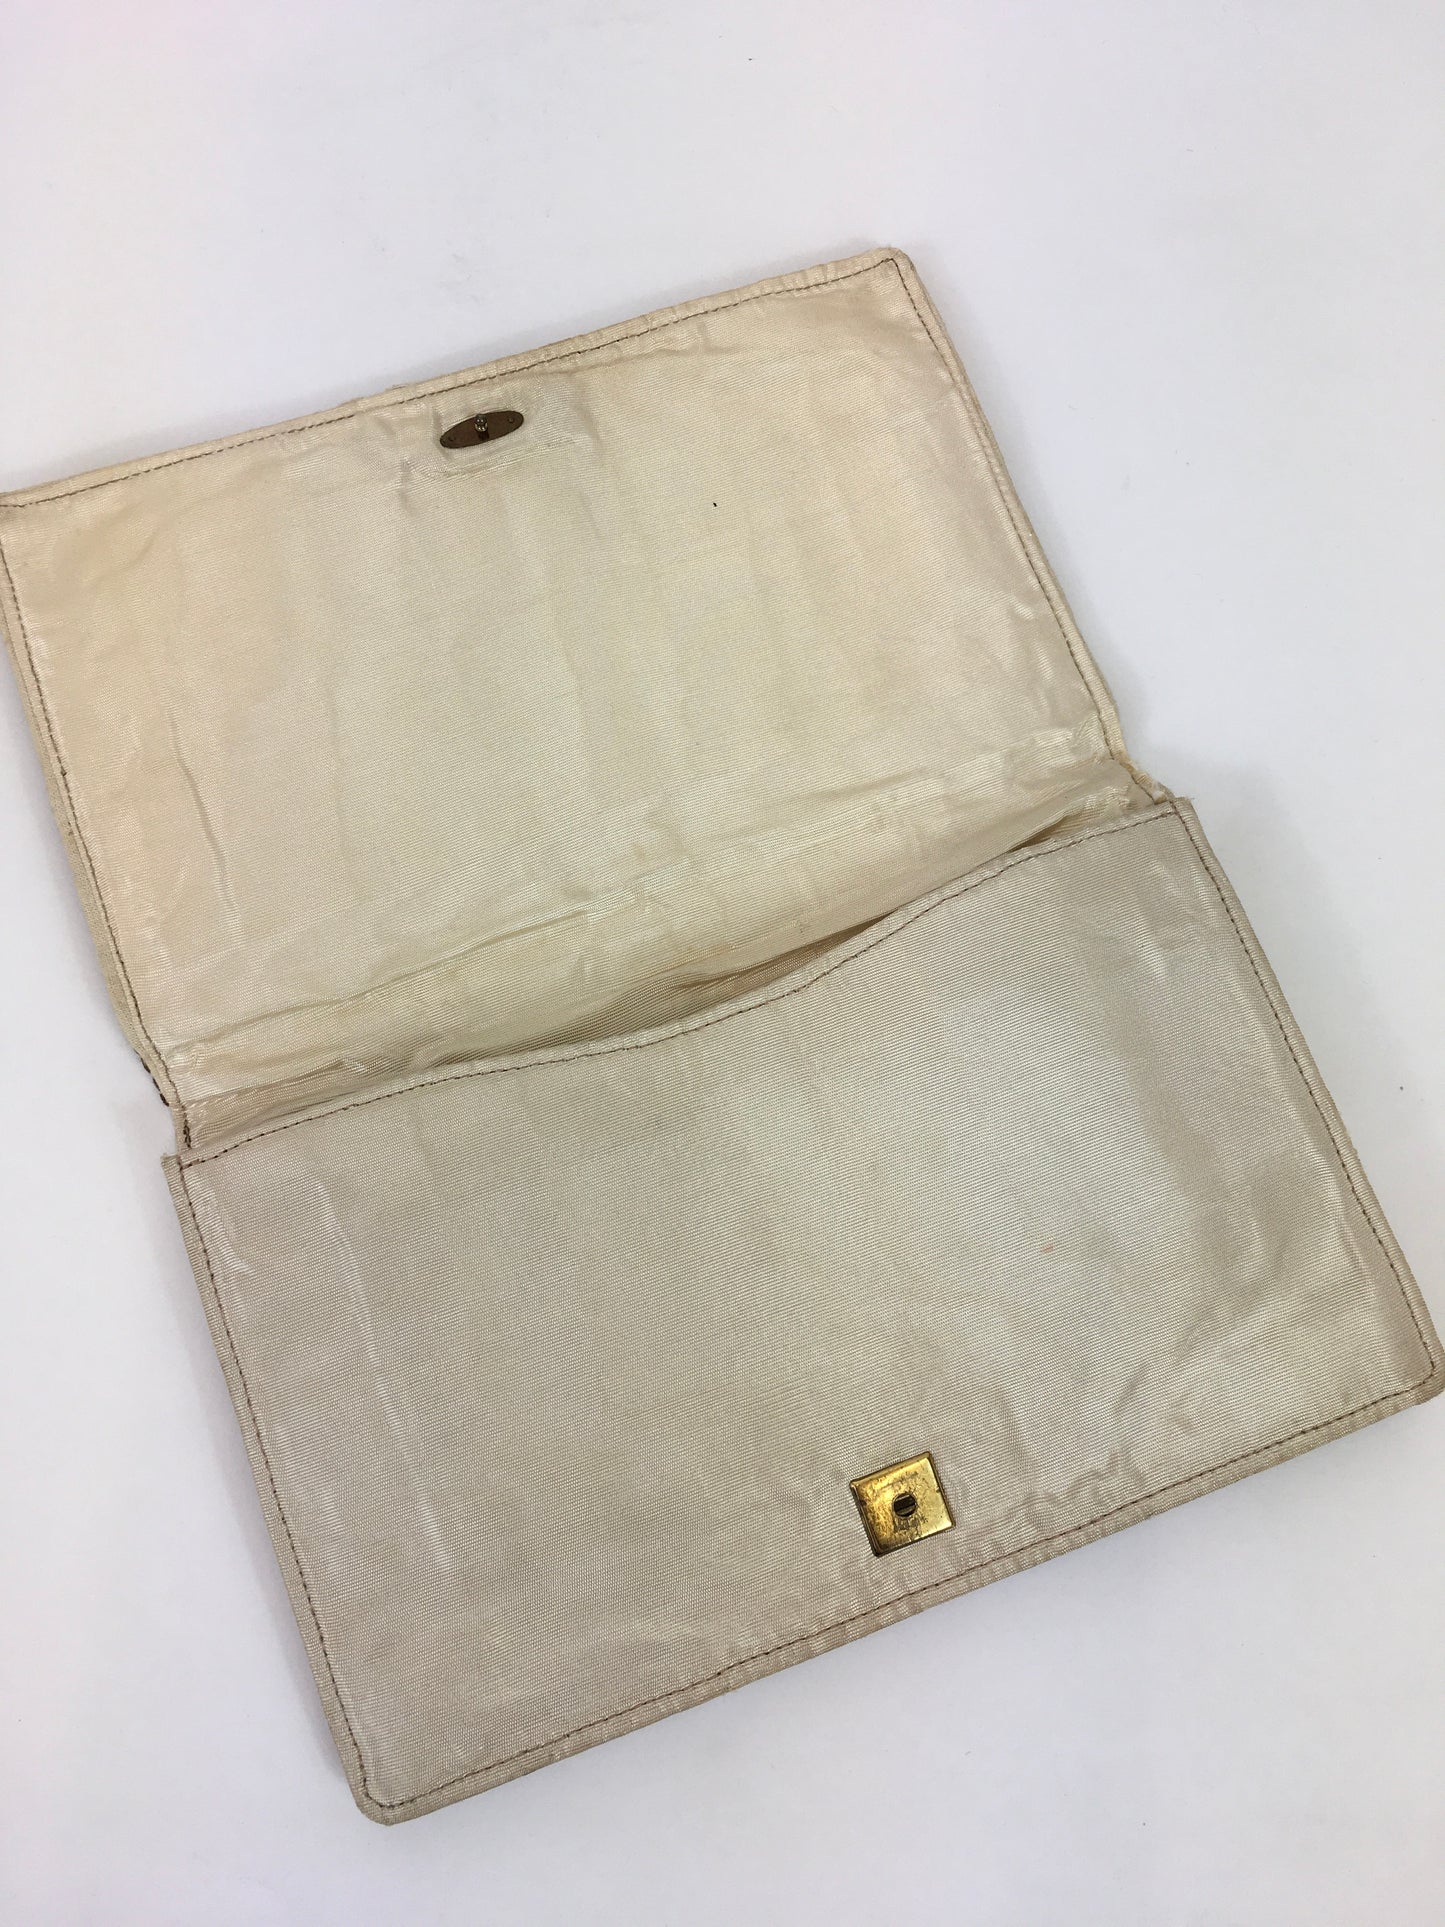 Original 1930's Darling Clutch Fabric Handbag - In a Warm Brown, Soft Orange and Beige Cloth